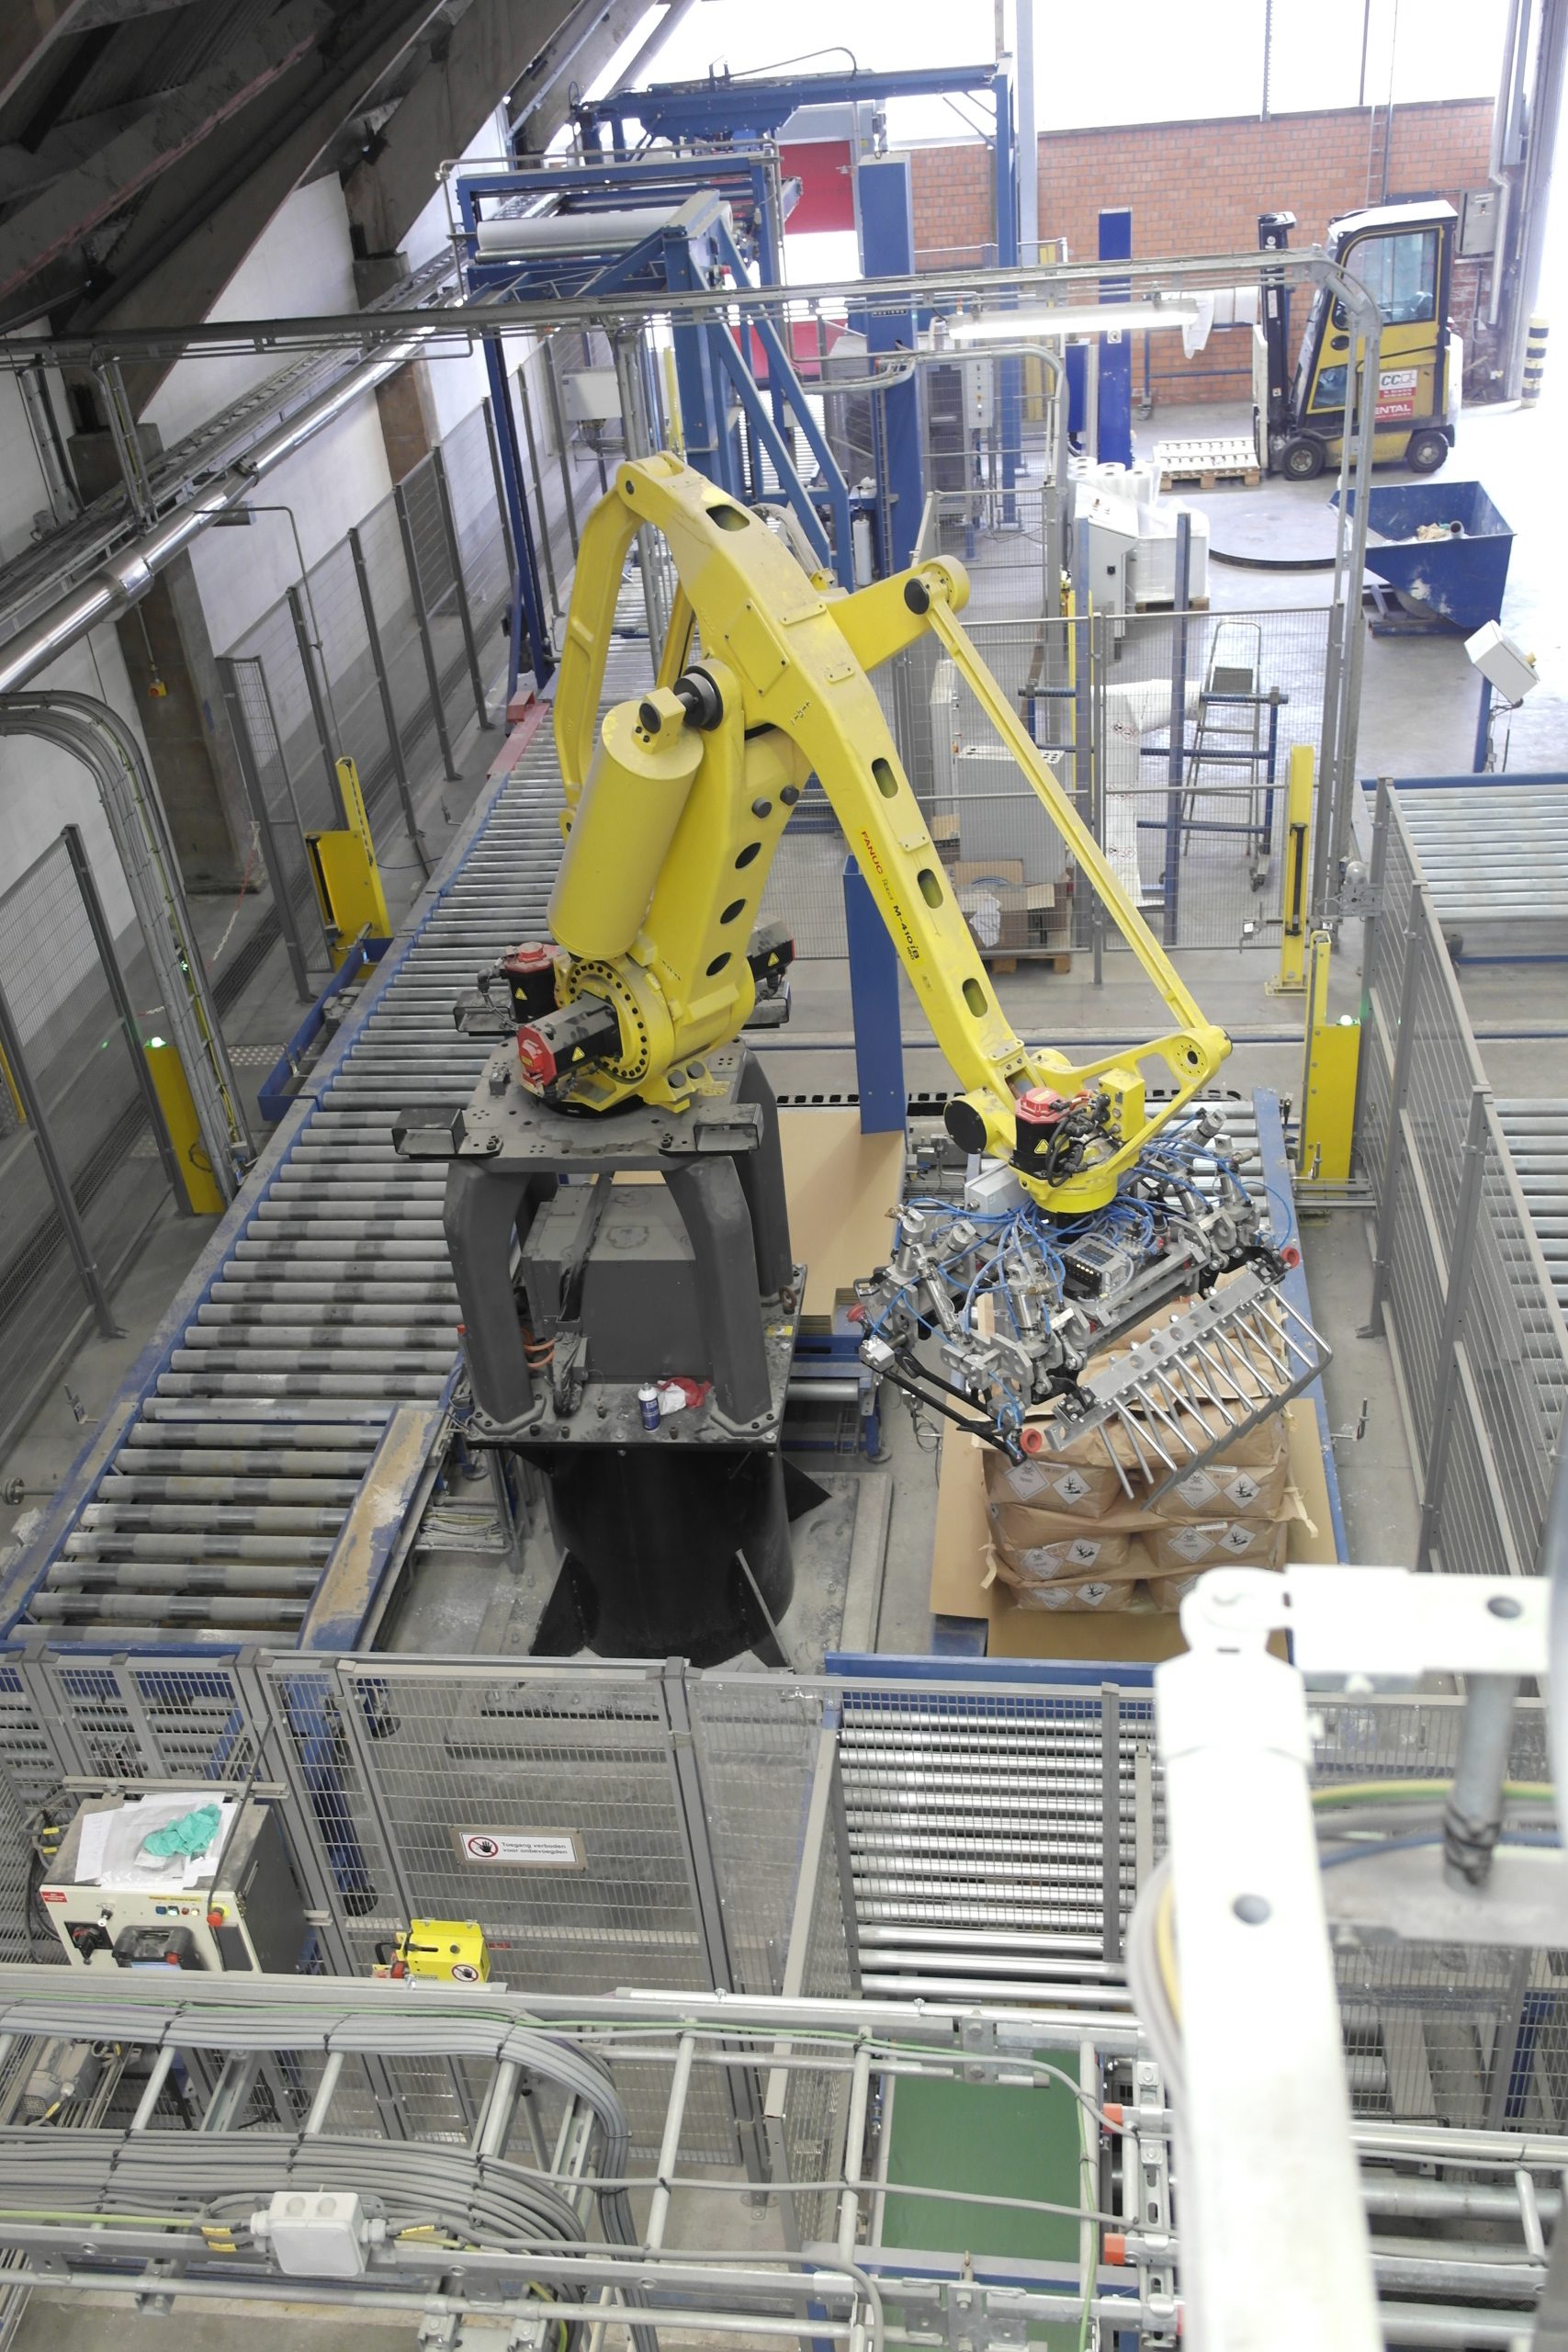 ATS Material Handing robots